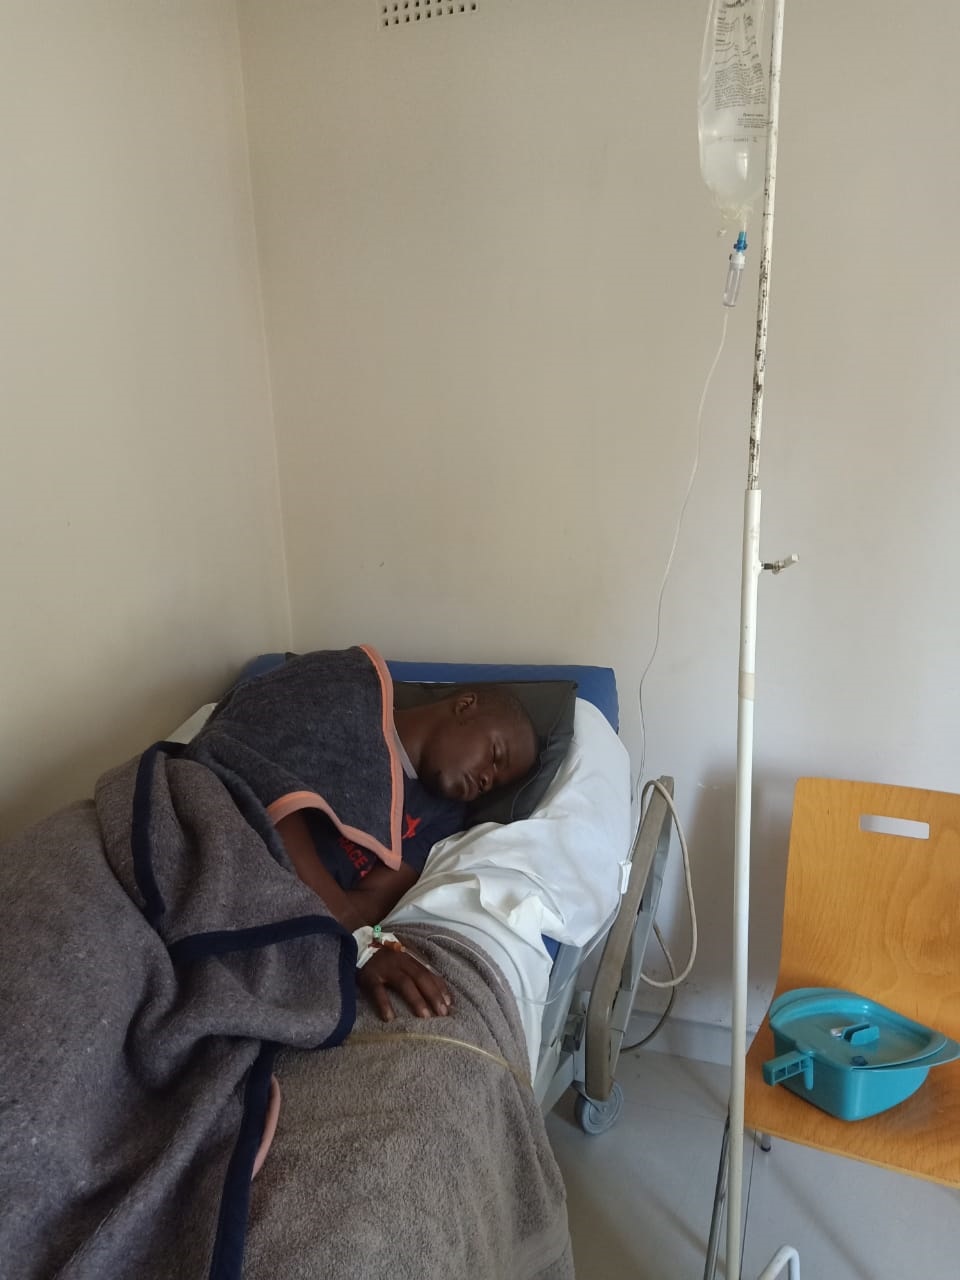 Zimbabwean journalists nephew hospitalised after h